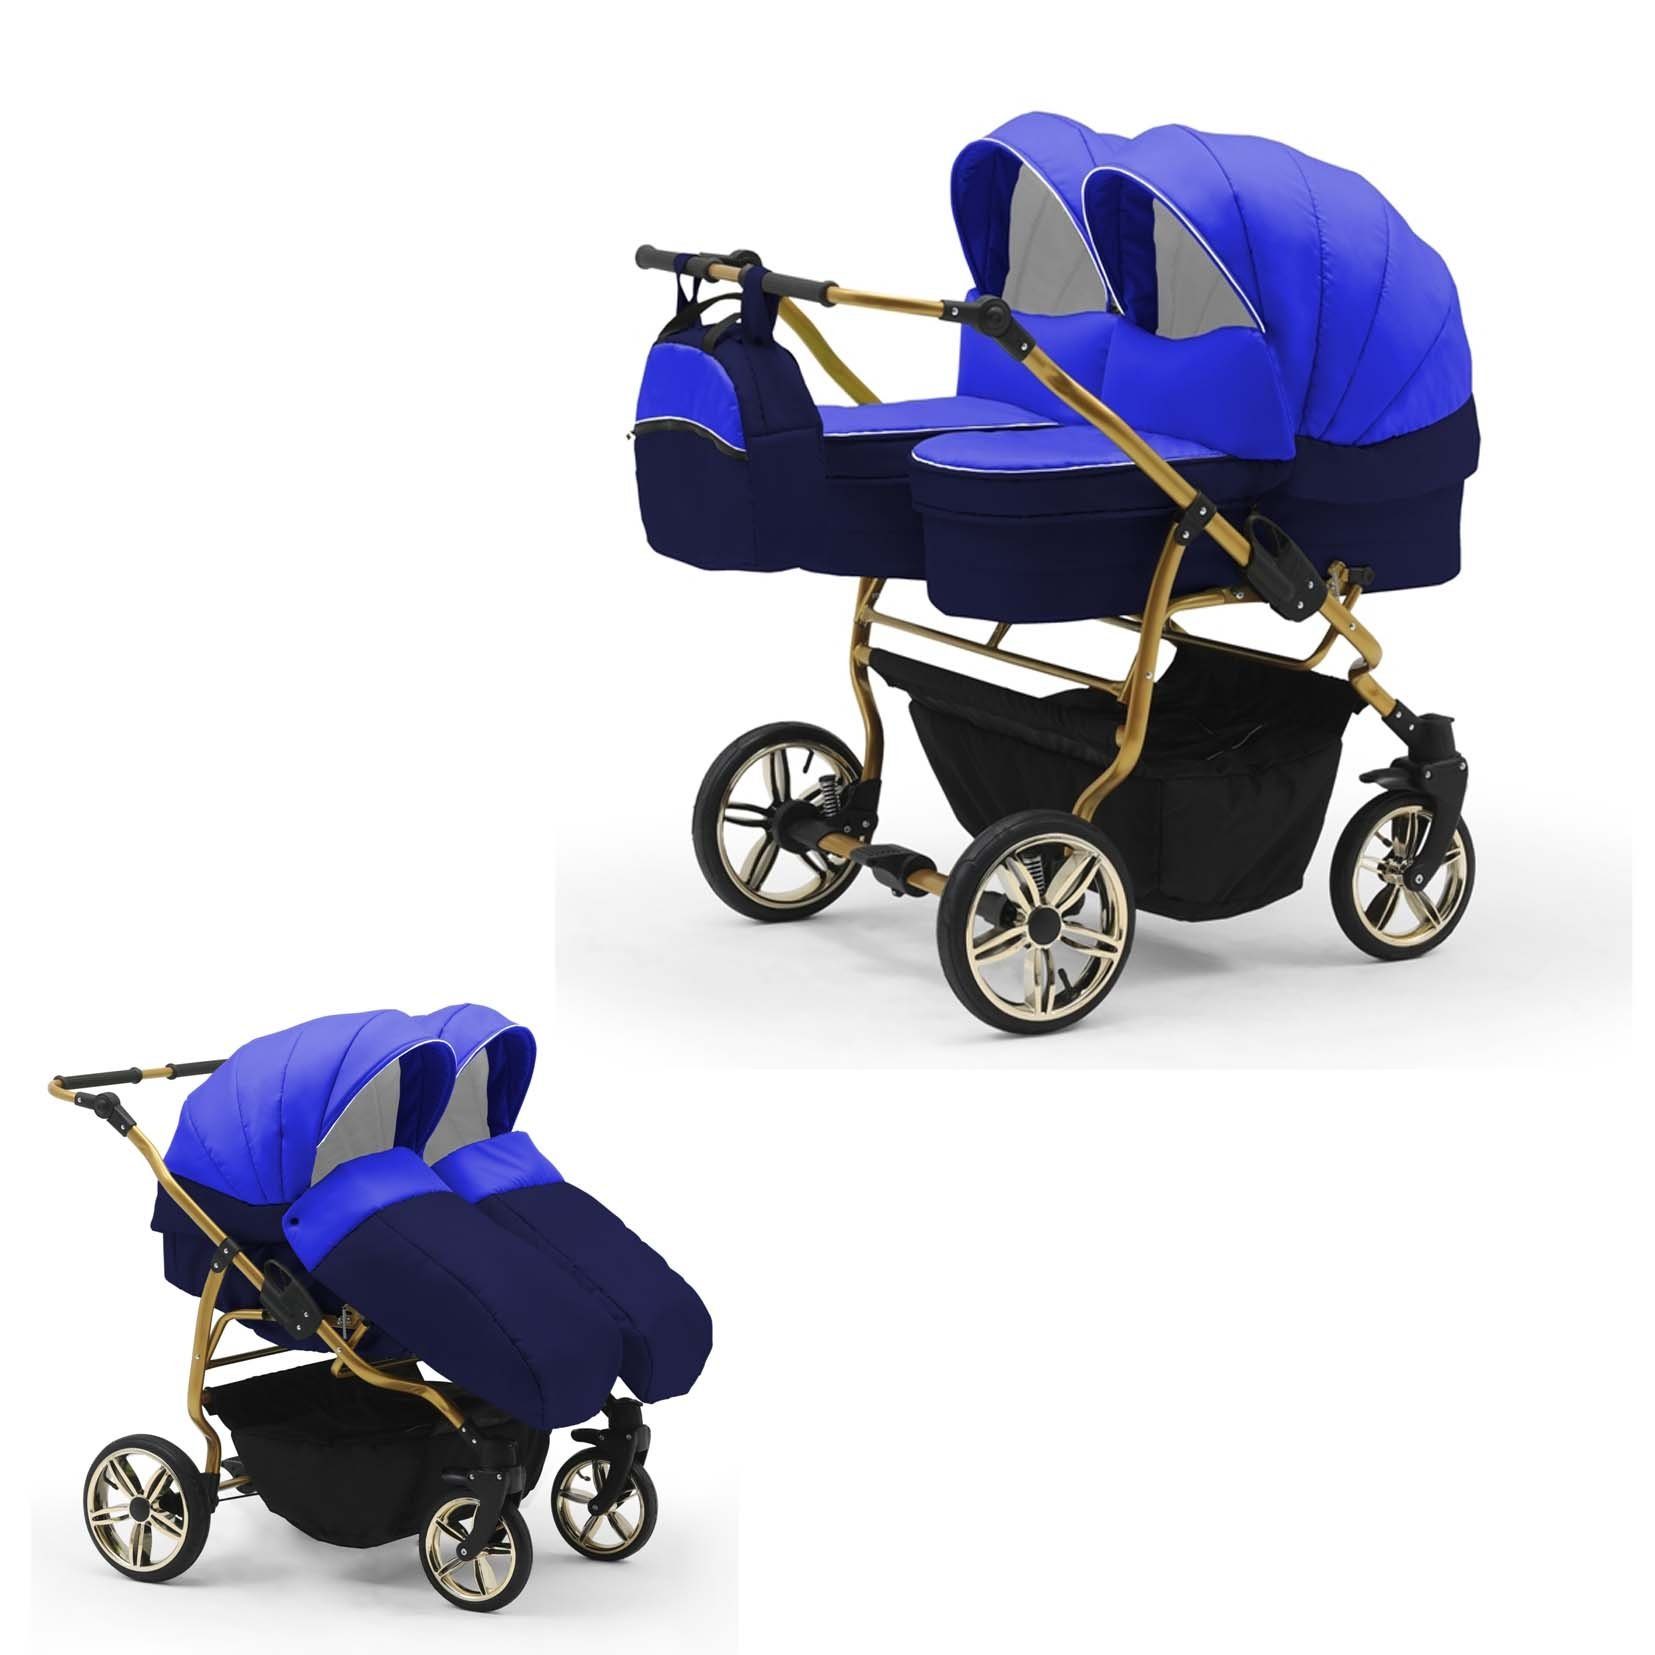 Zwillingswagen Lux babies-on-wheels Royalblau-Navy - Teile 2 10 Zwillingskinderwagen in in Farben 33 1 Duet -